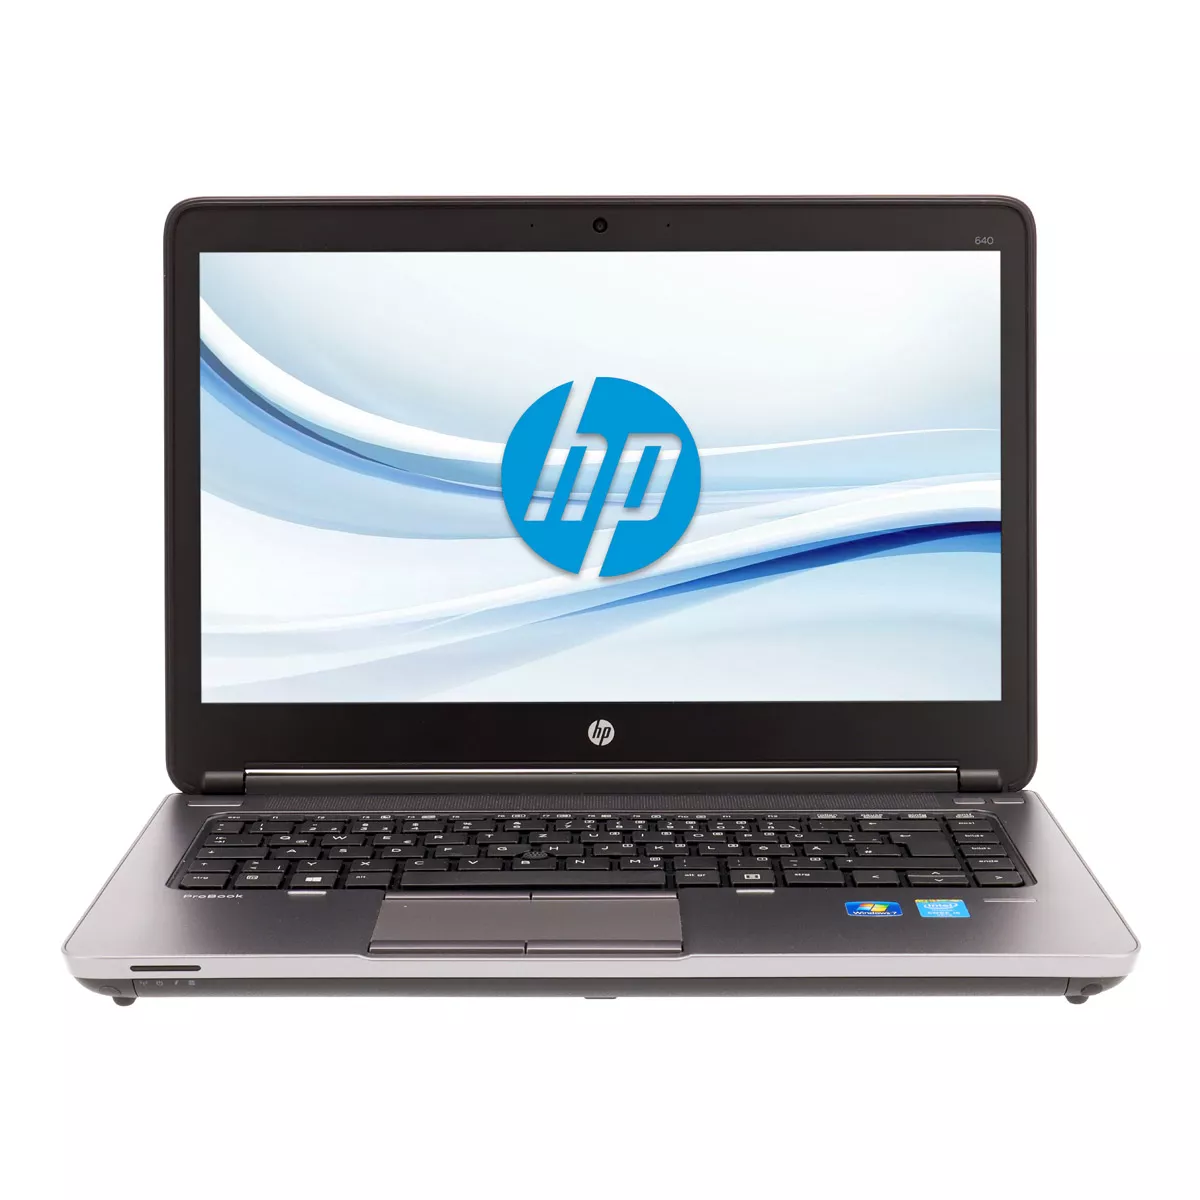 HP ProBook 640 G1 Core i5 4300M 2,60 GHz 8 GB 128 GB Webcam A